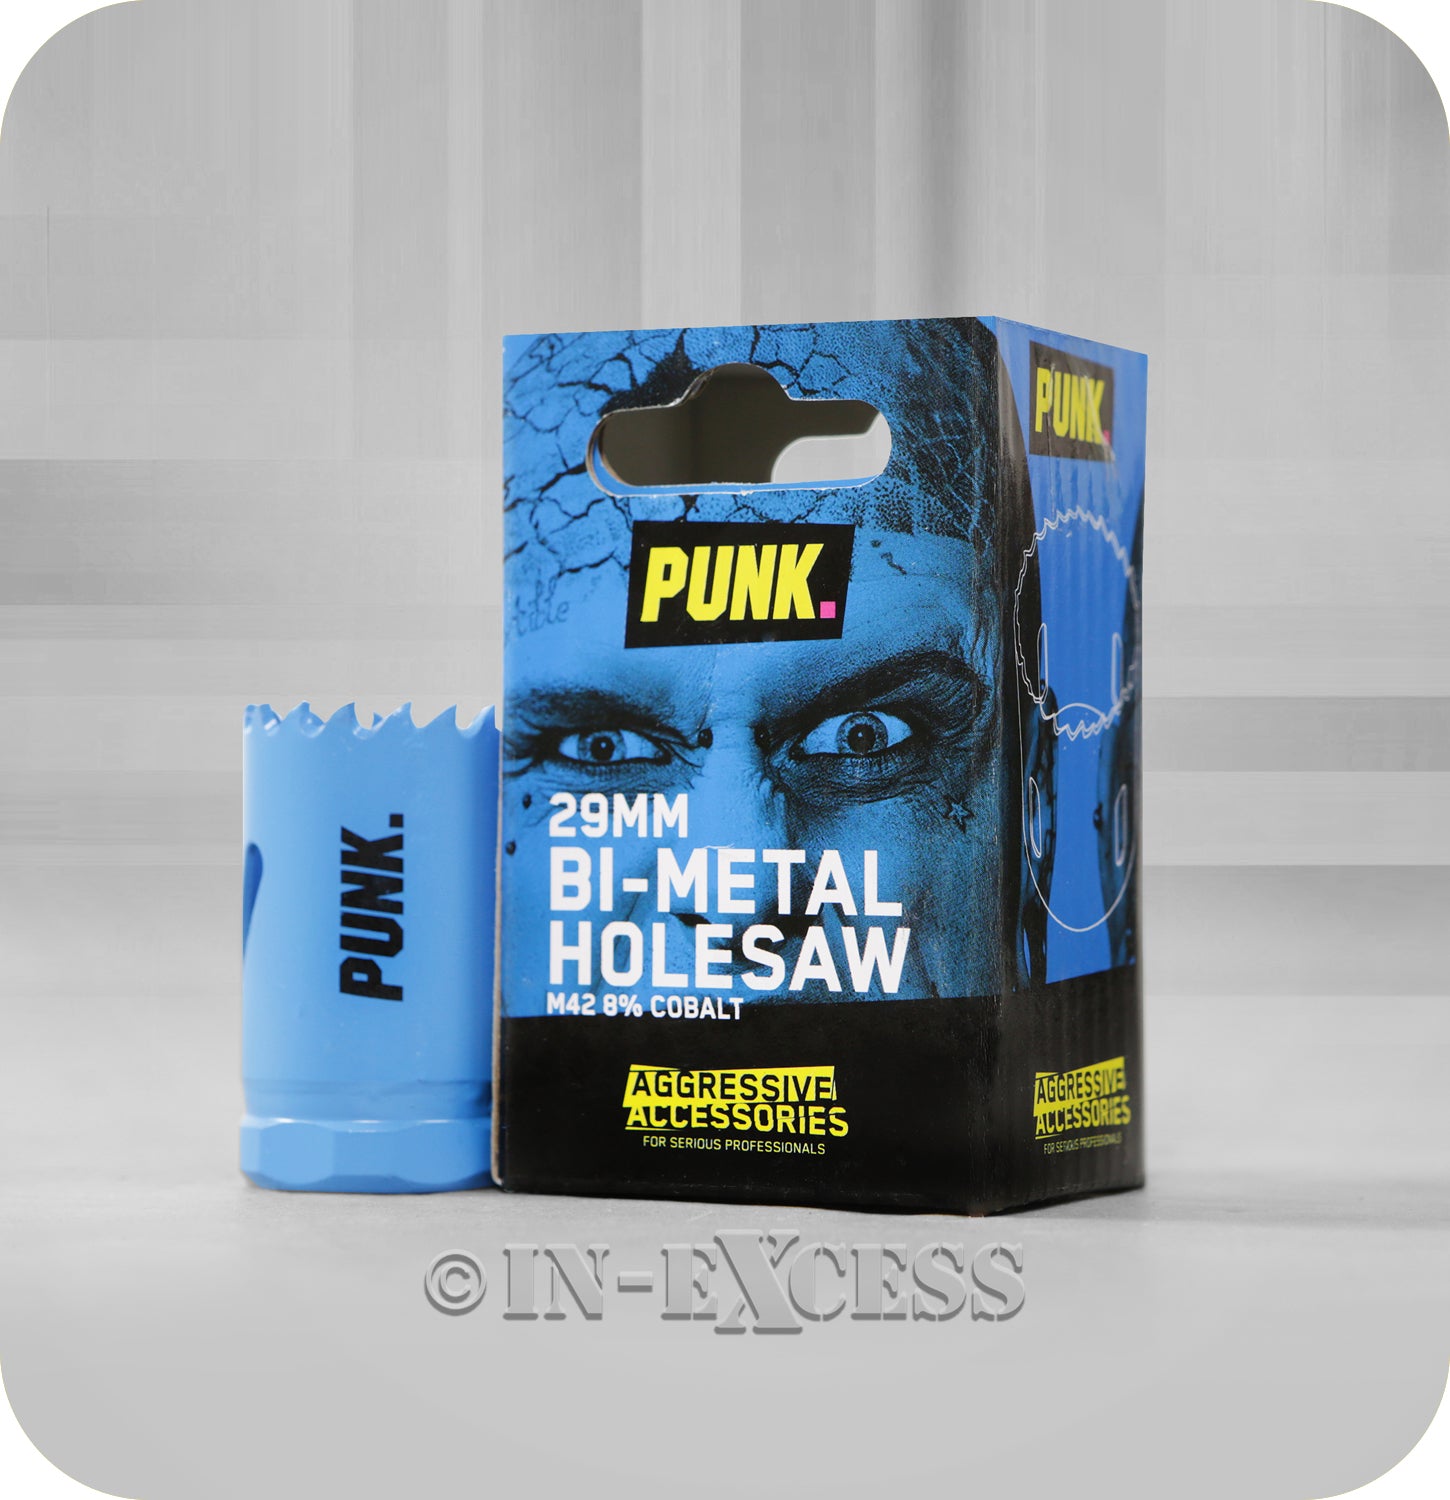 Punk Power Tool Accessories Bi-Metal Cobalt Holesaw Bit - 29mm ( 1 1/8")